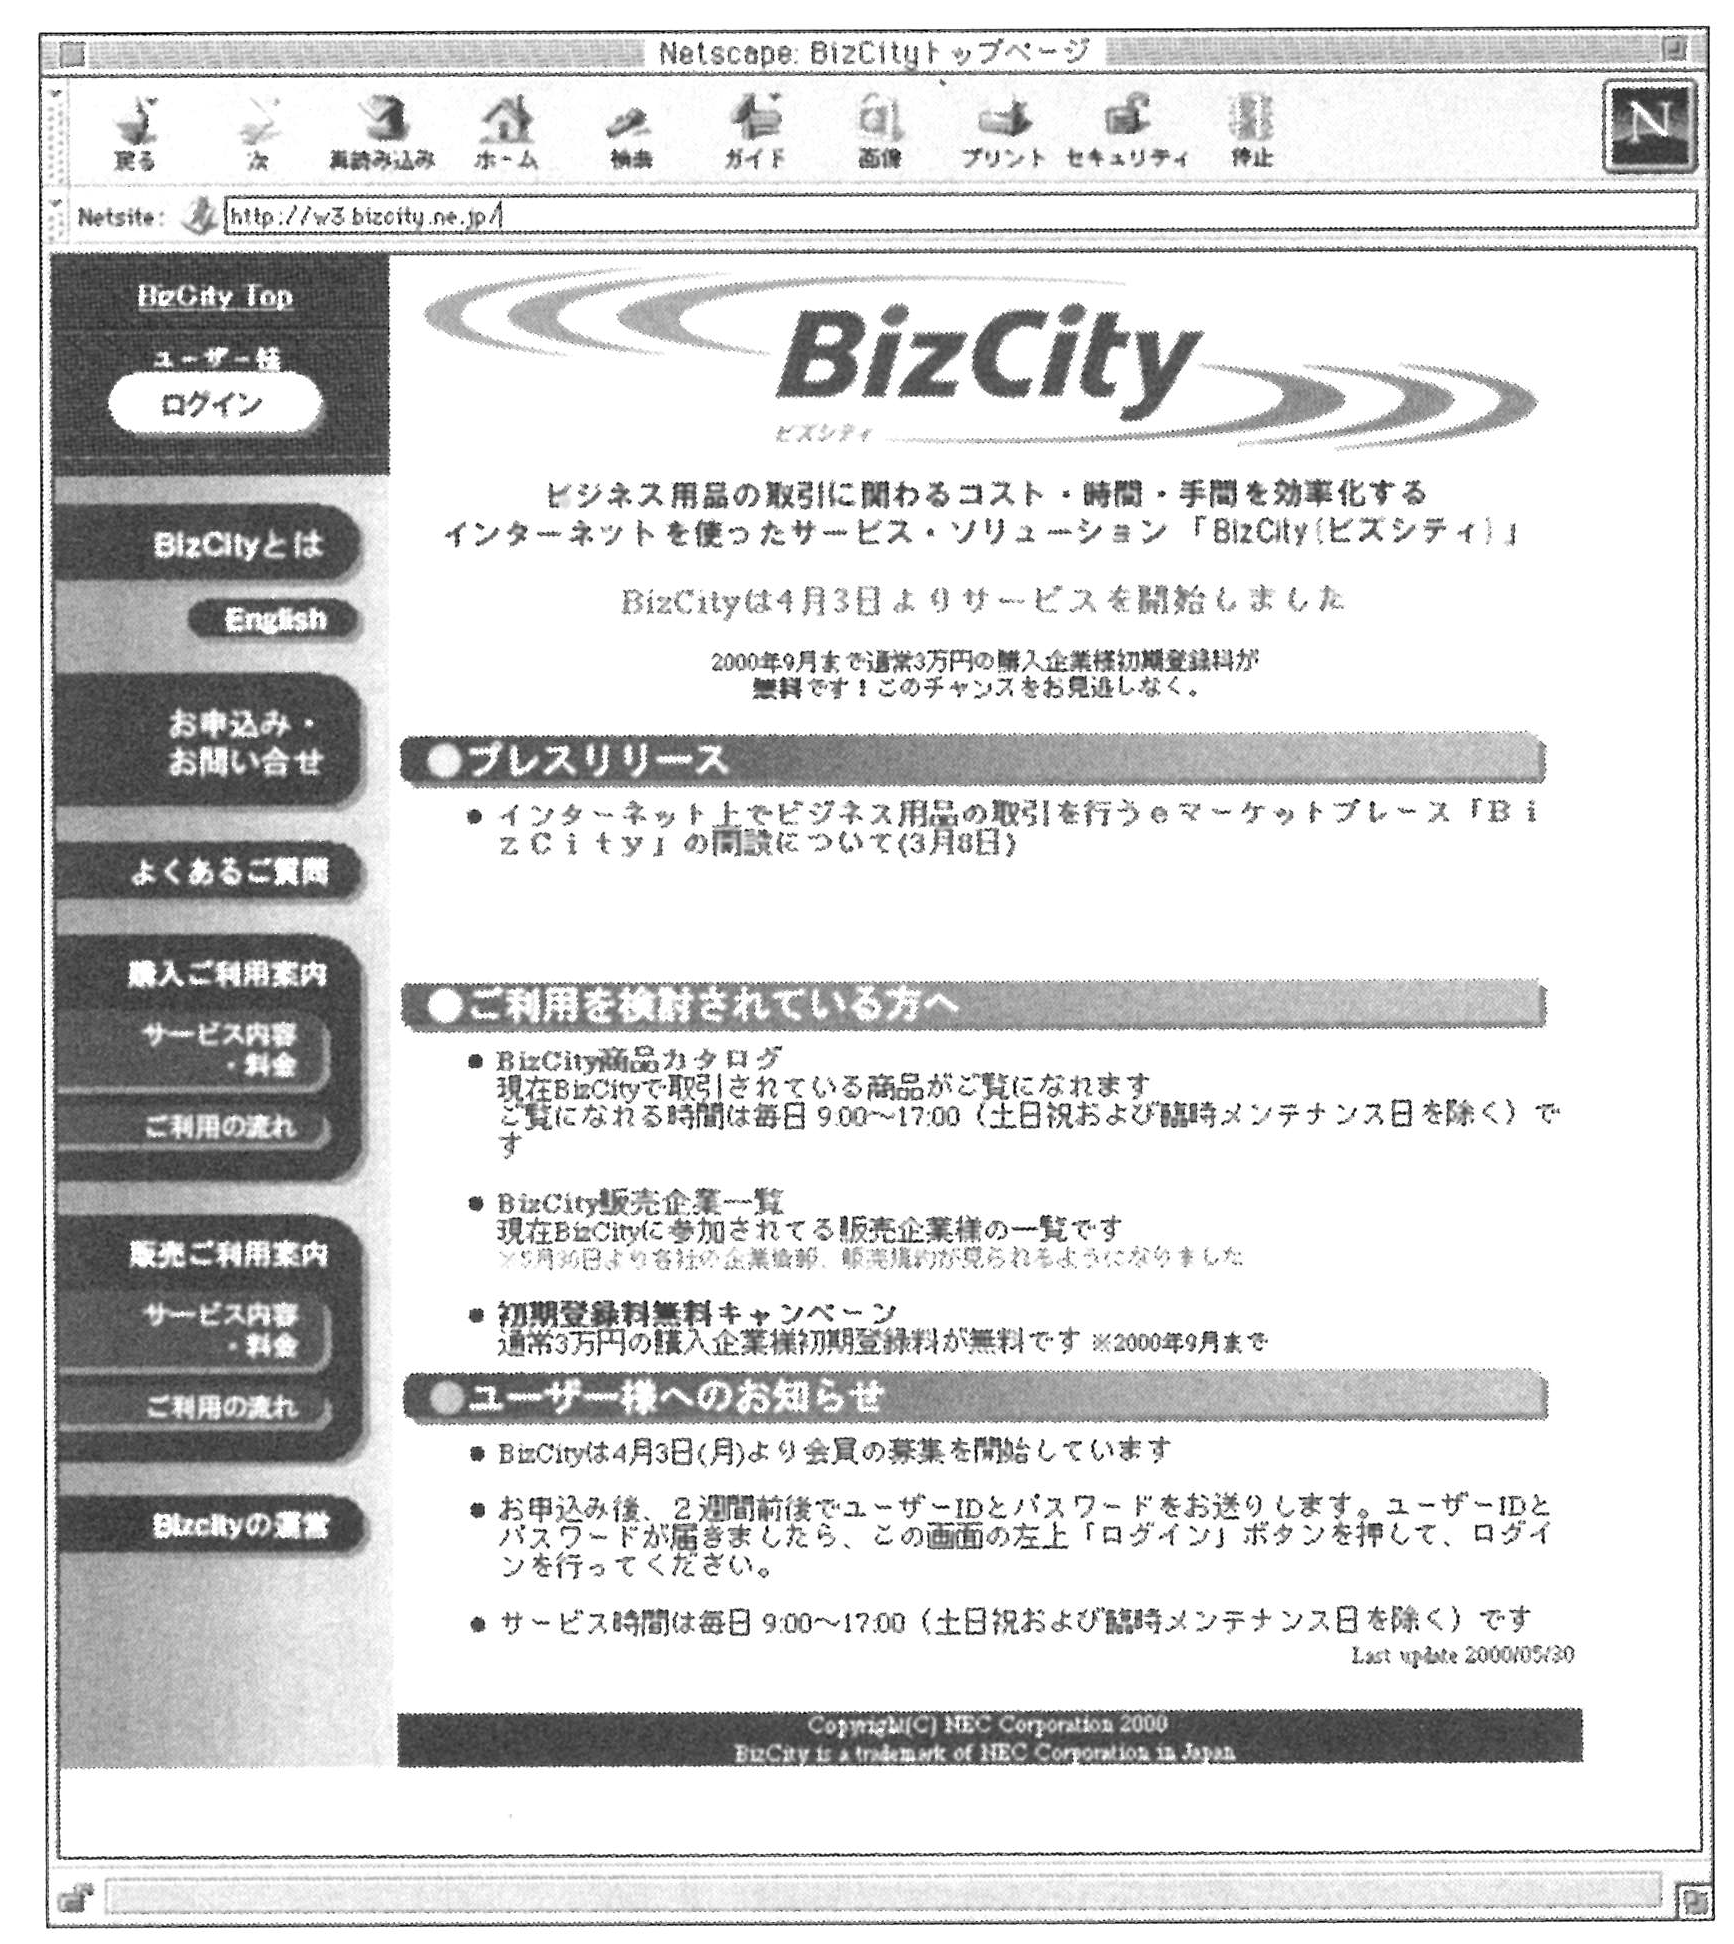 「BizCity」のホームページ画面
(URL: http://w3.bizcity.ne.jp/)